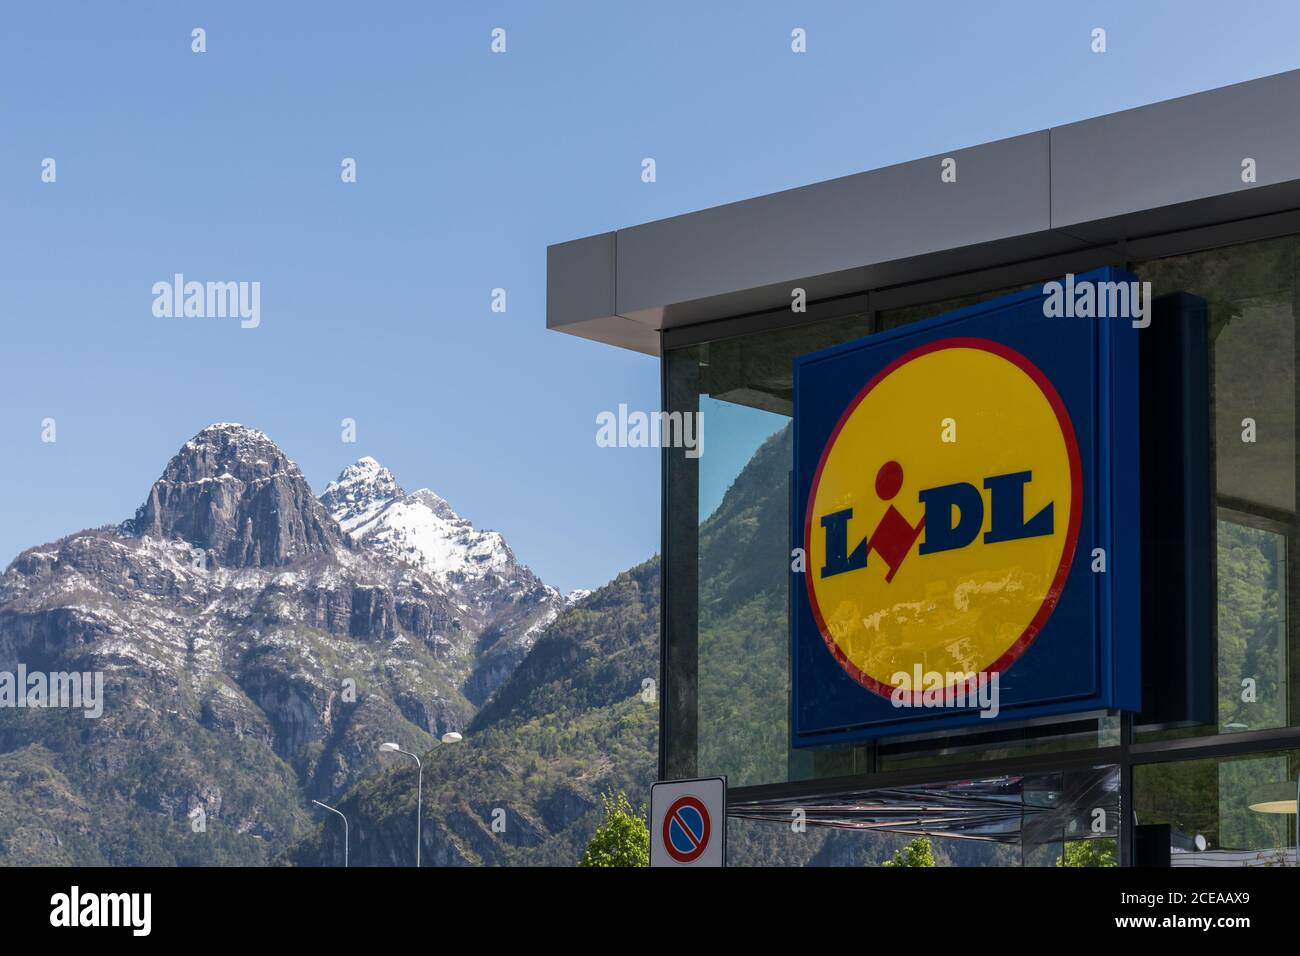 Lidl supermarket sign in Ponte nelle Alpi, Italy Stock Photo